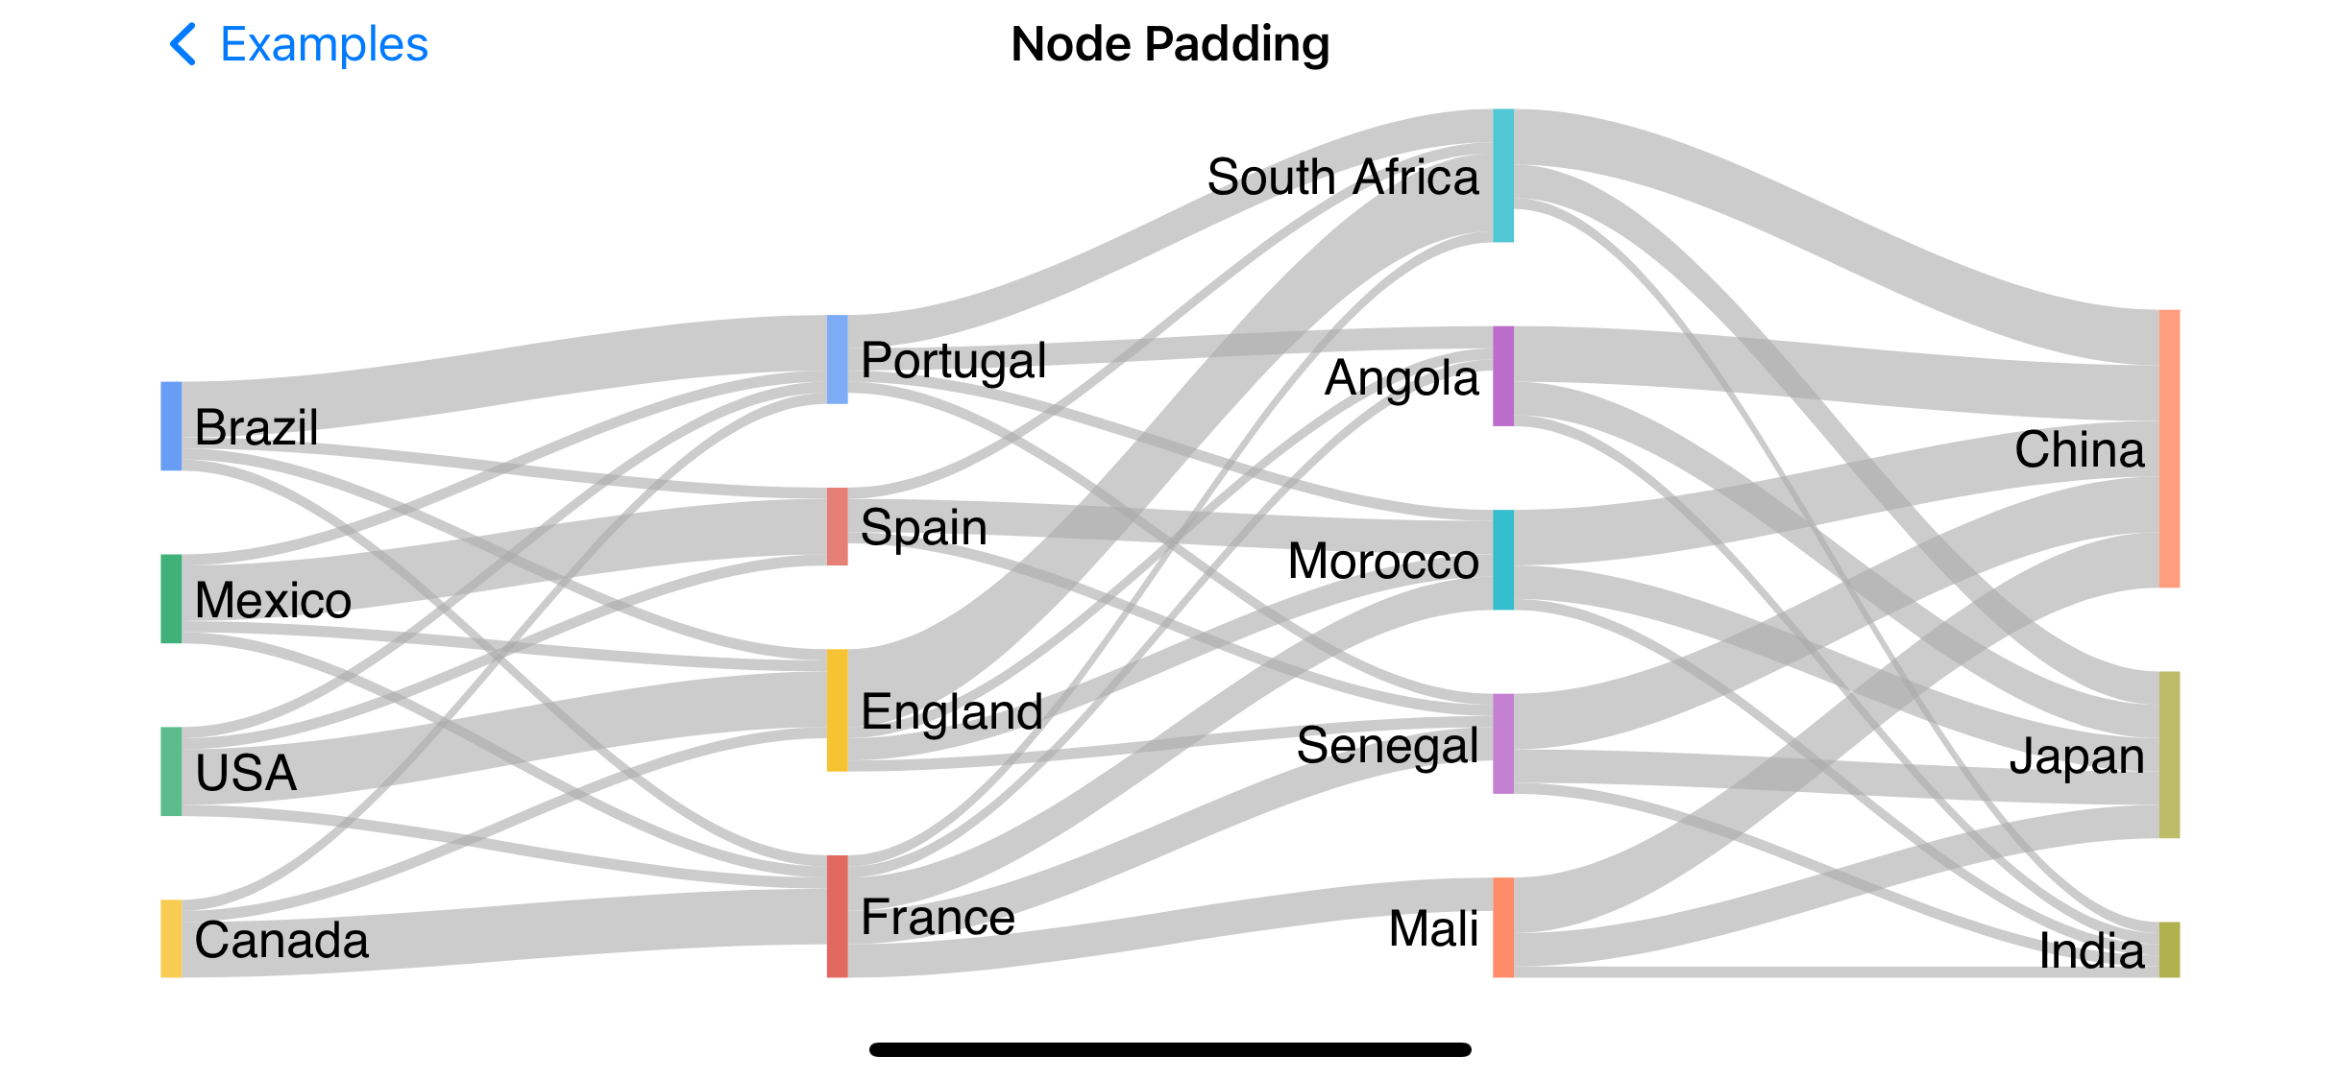 node_padding